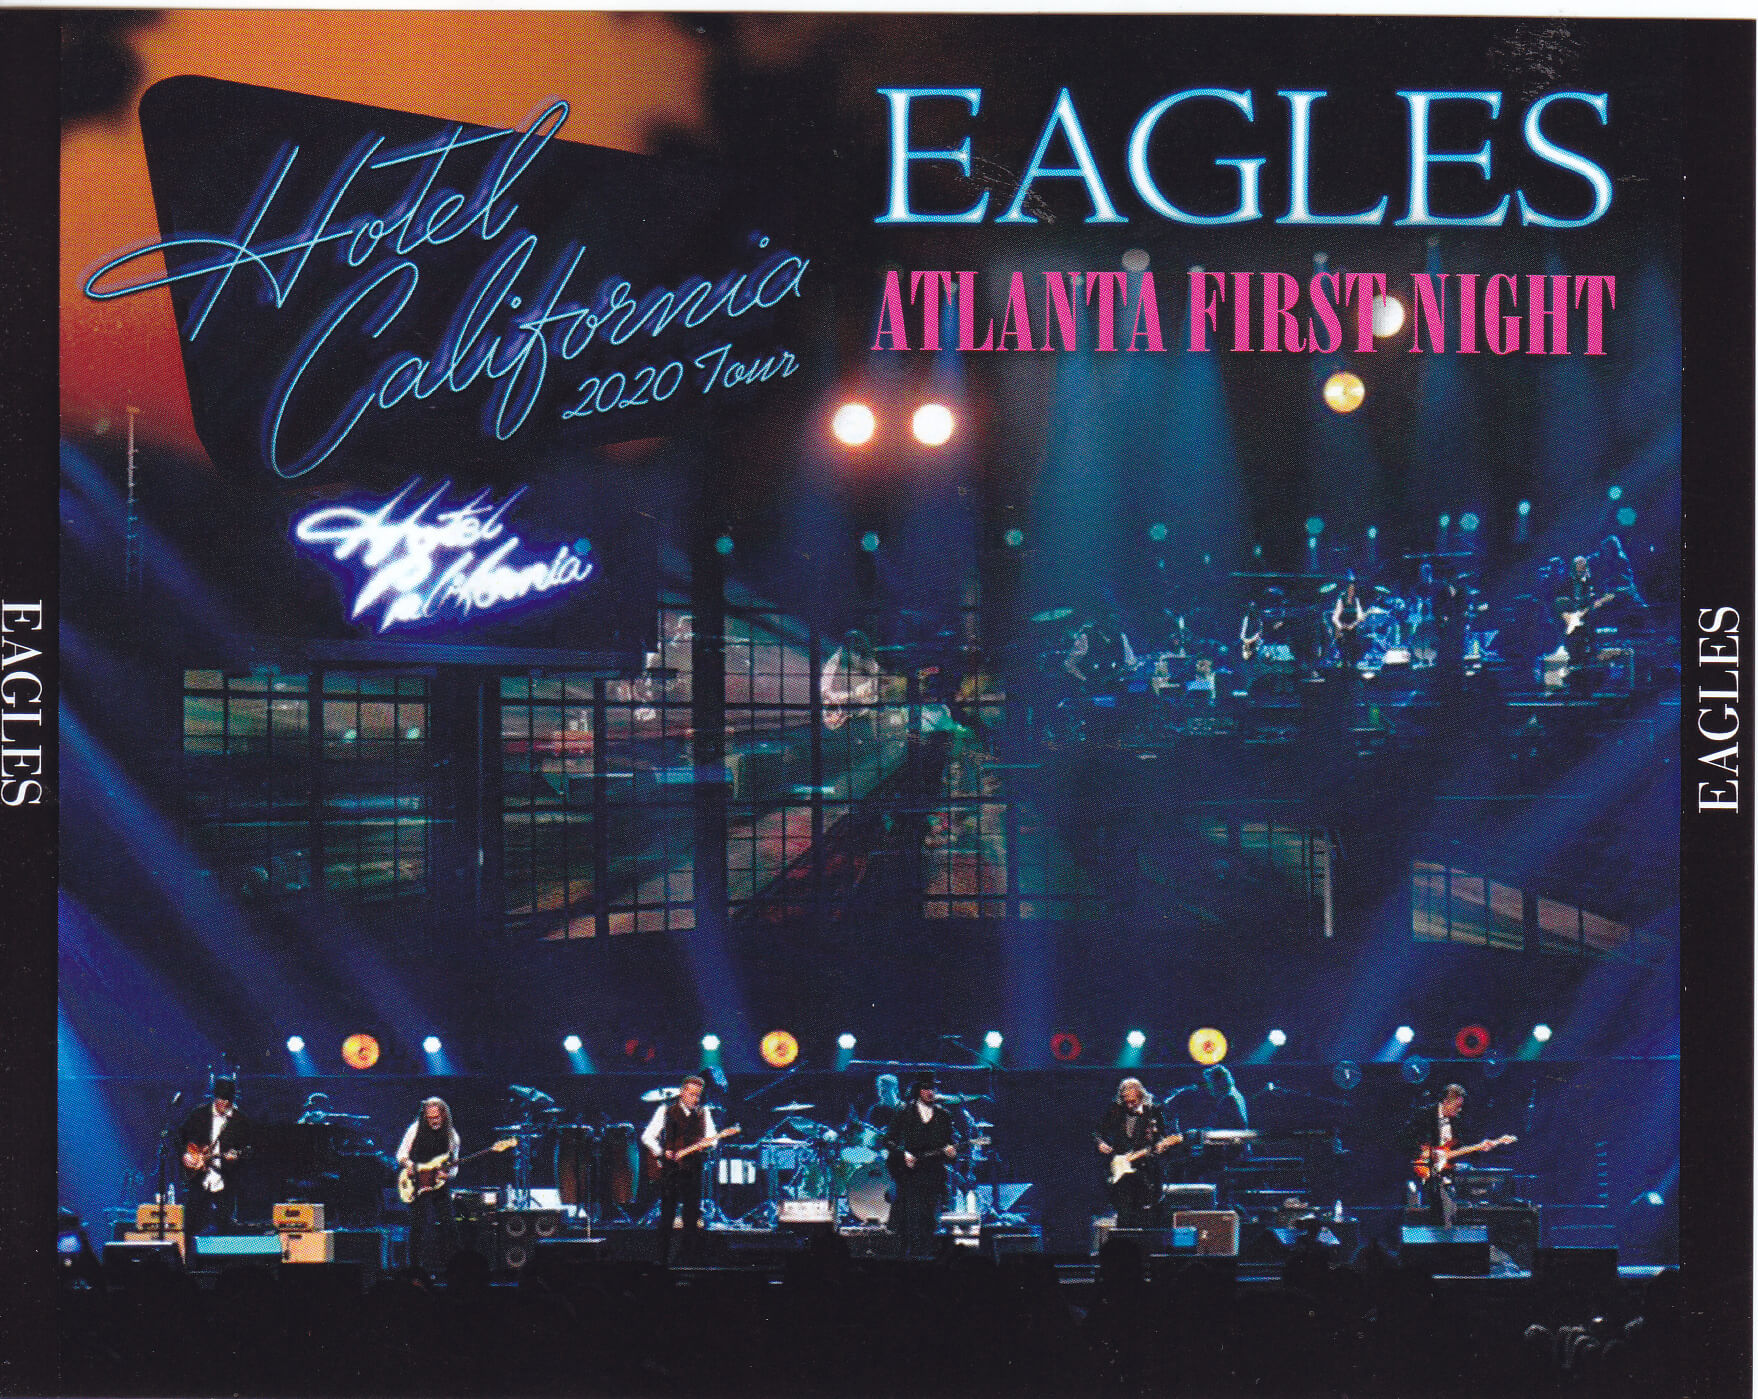 Eagles / Hotel California Tour 2020 Atlanta First Night / 3CDR GiGinJapan